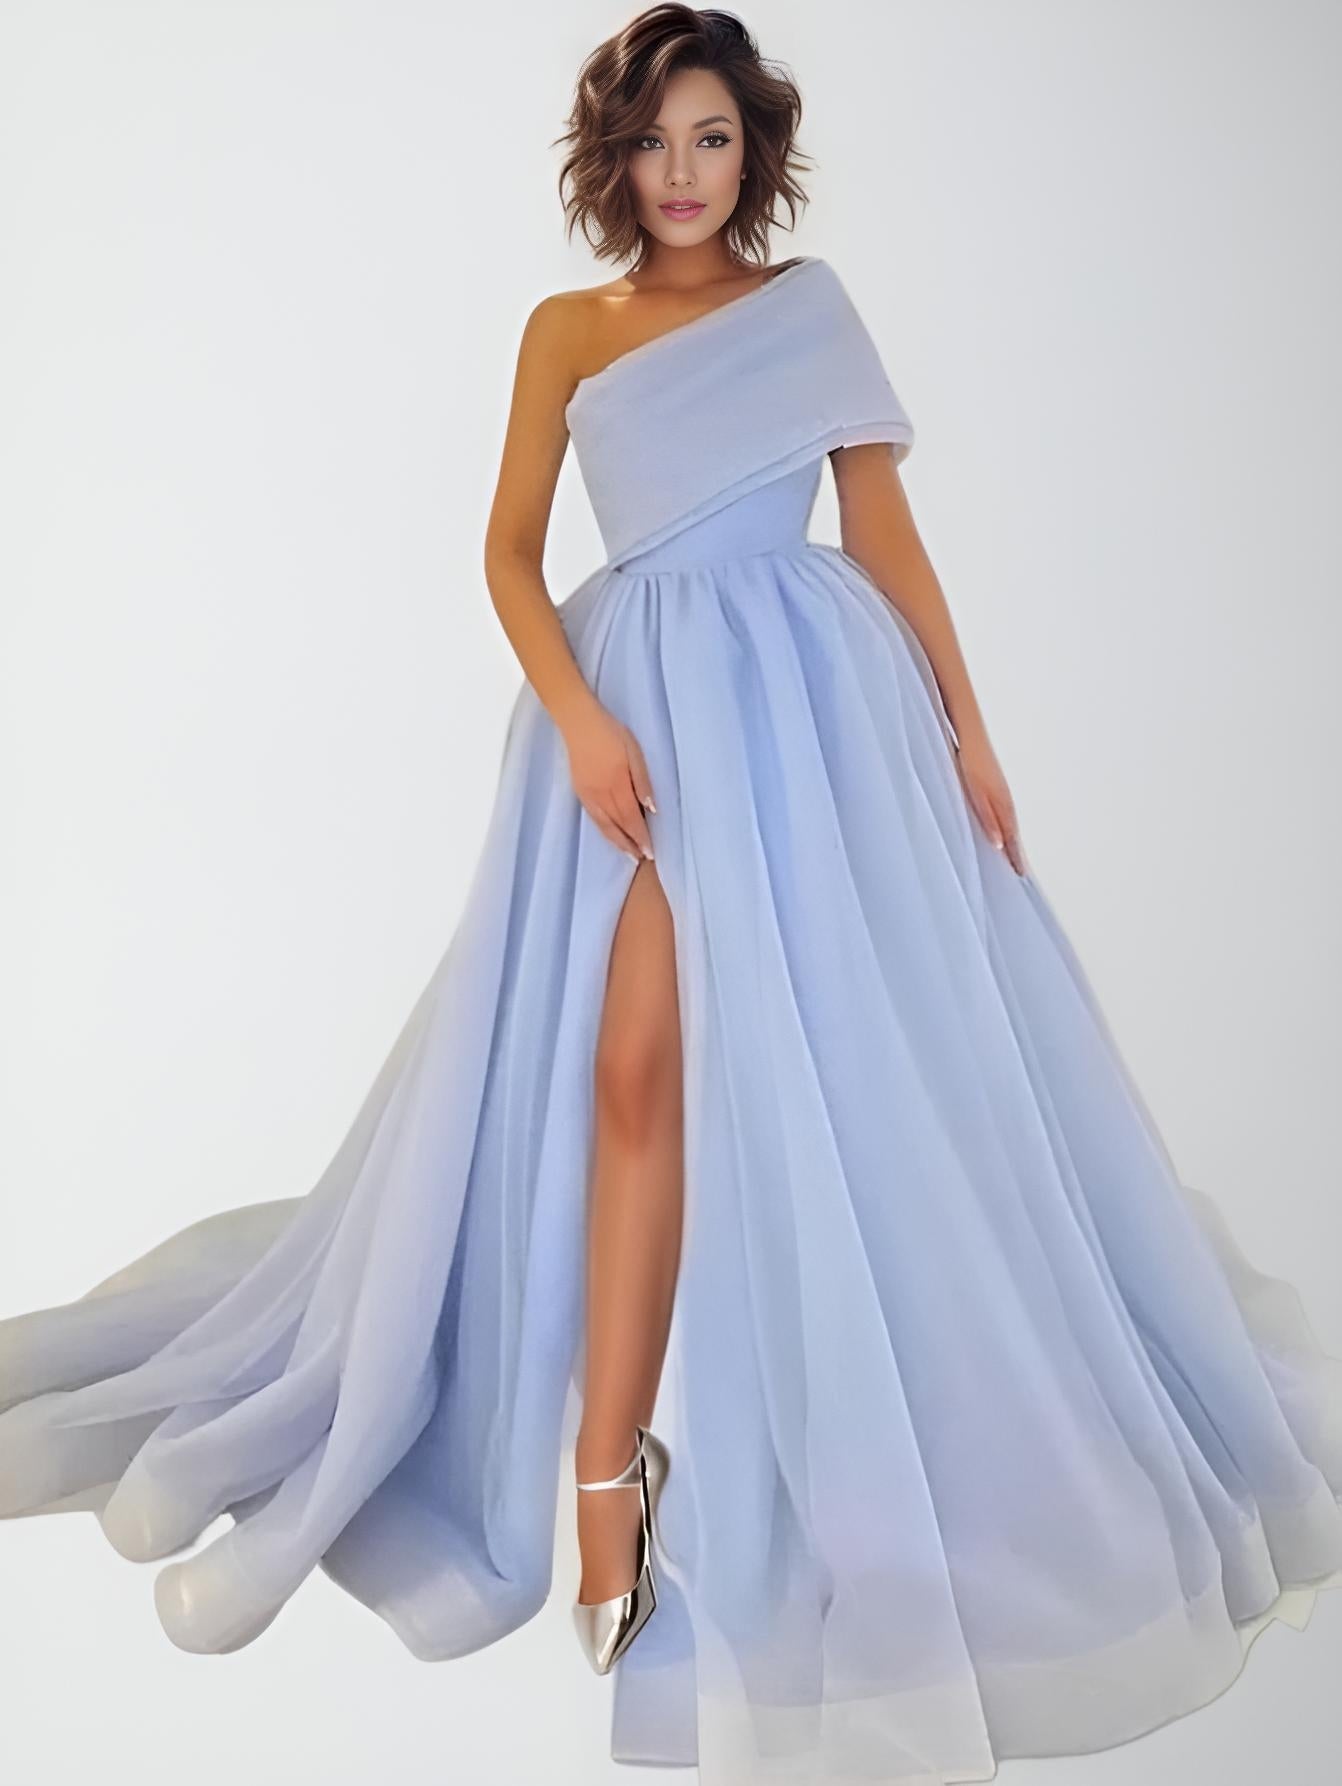 Glamorous woman flaunting Dusty Blue Alice One Shoulder High Slit Dress